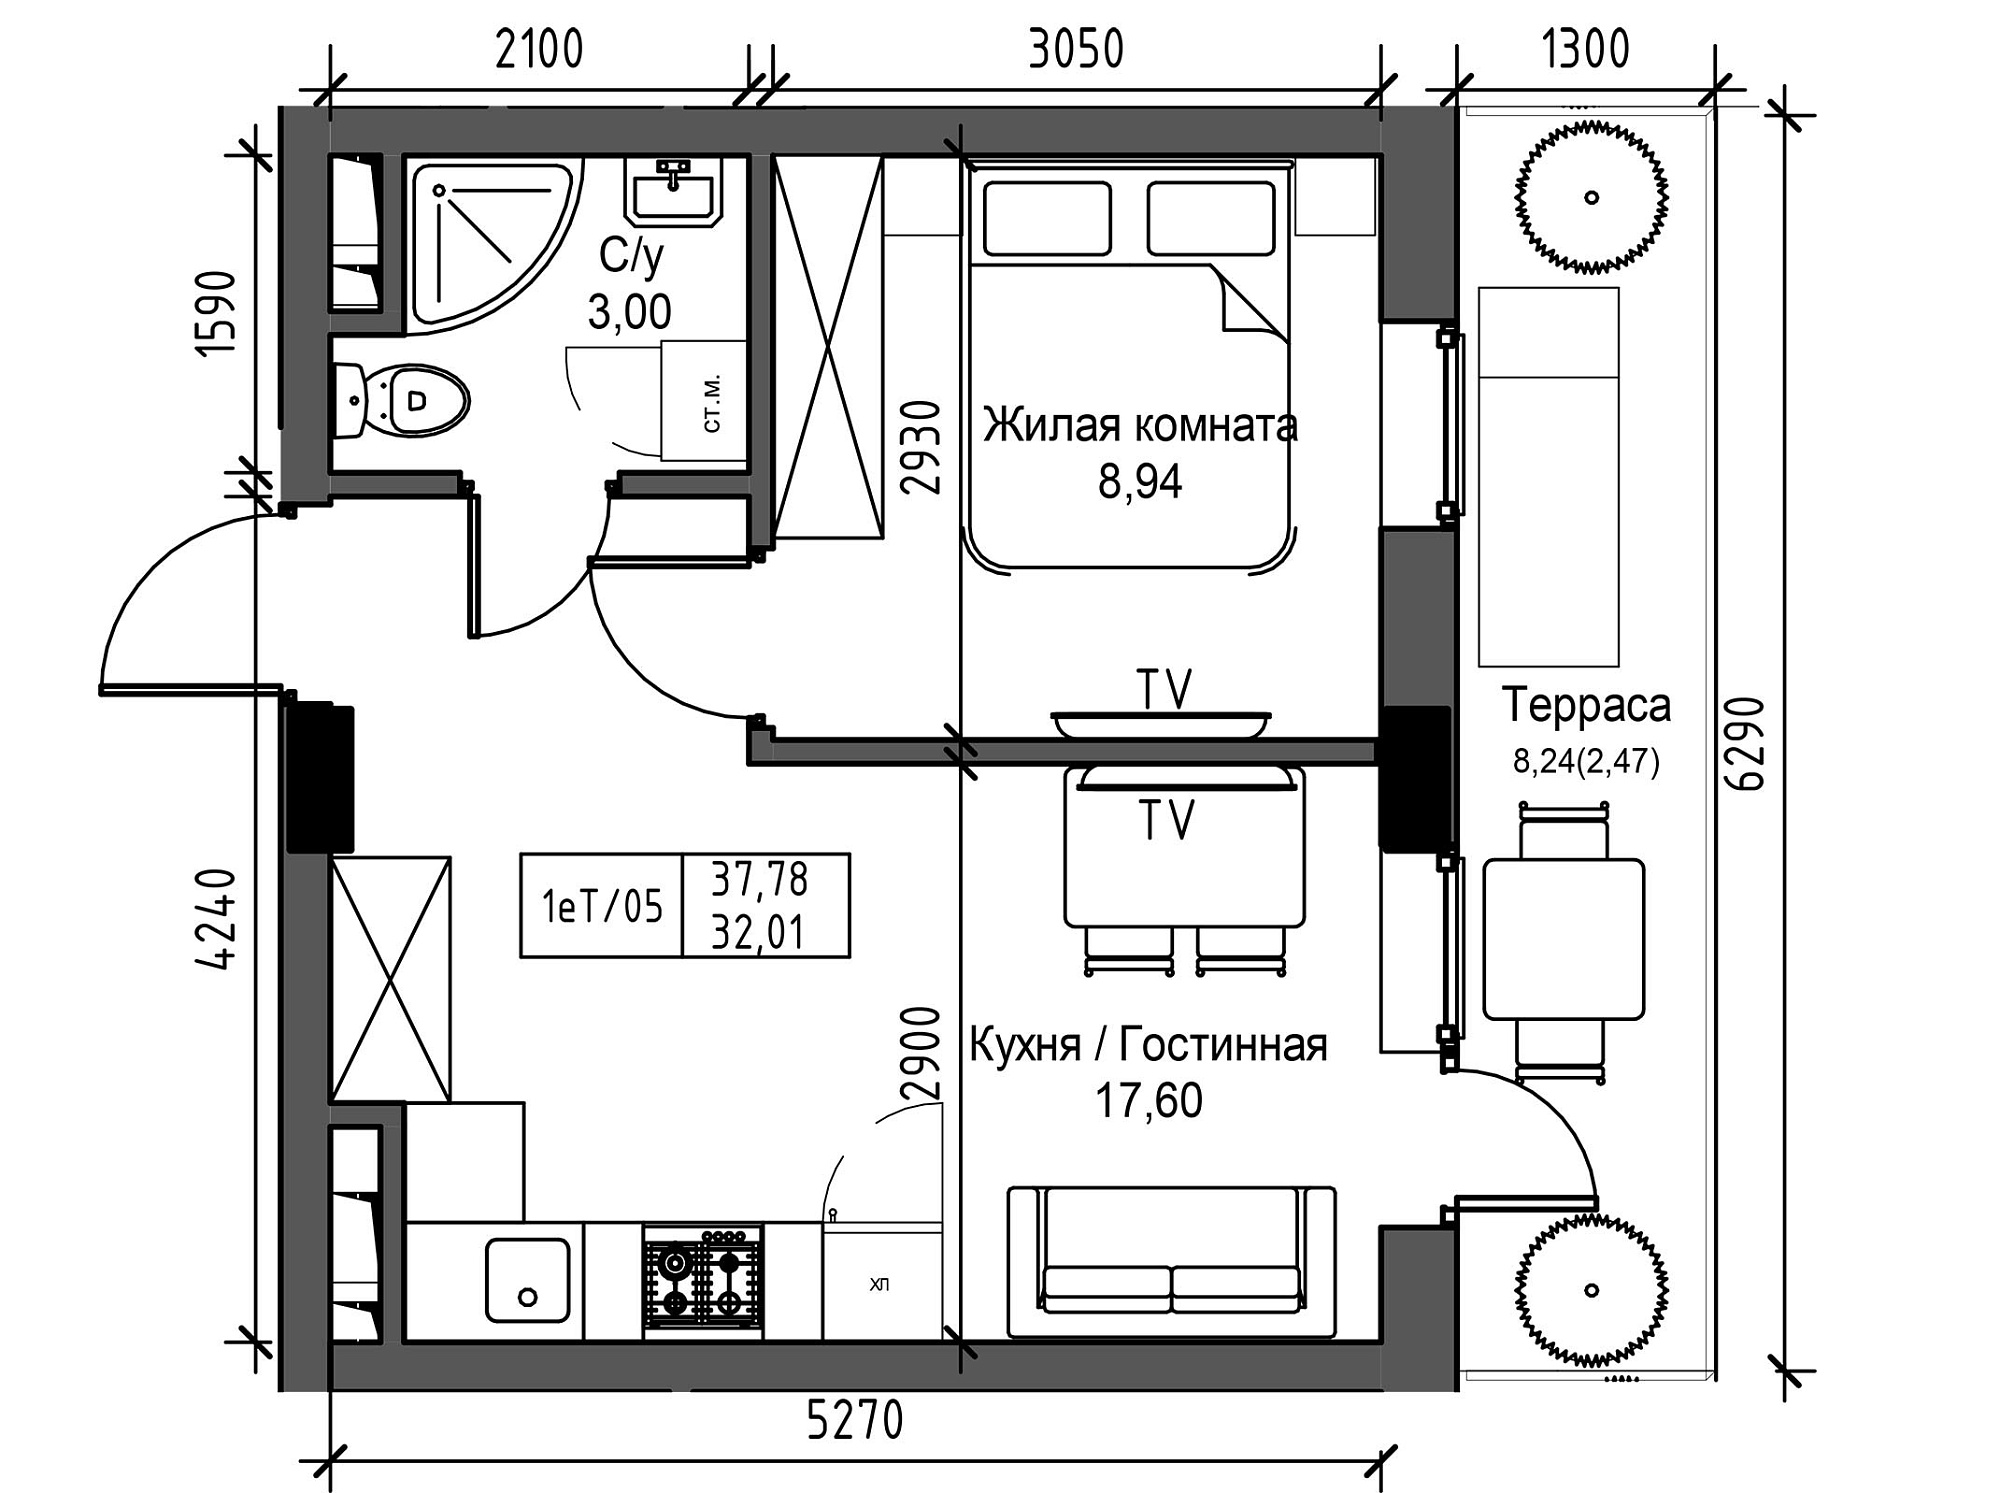 Планування 1-к квартира площею 32.01м2, UM-003-11/0115.